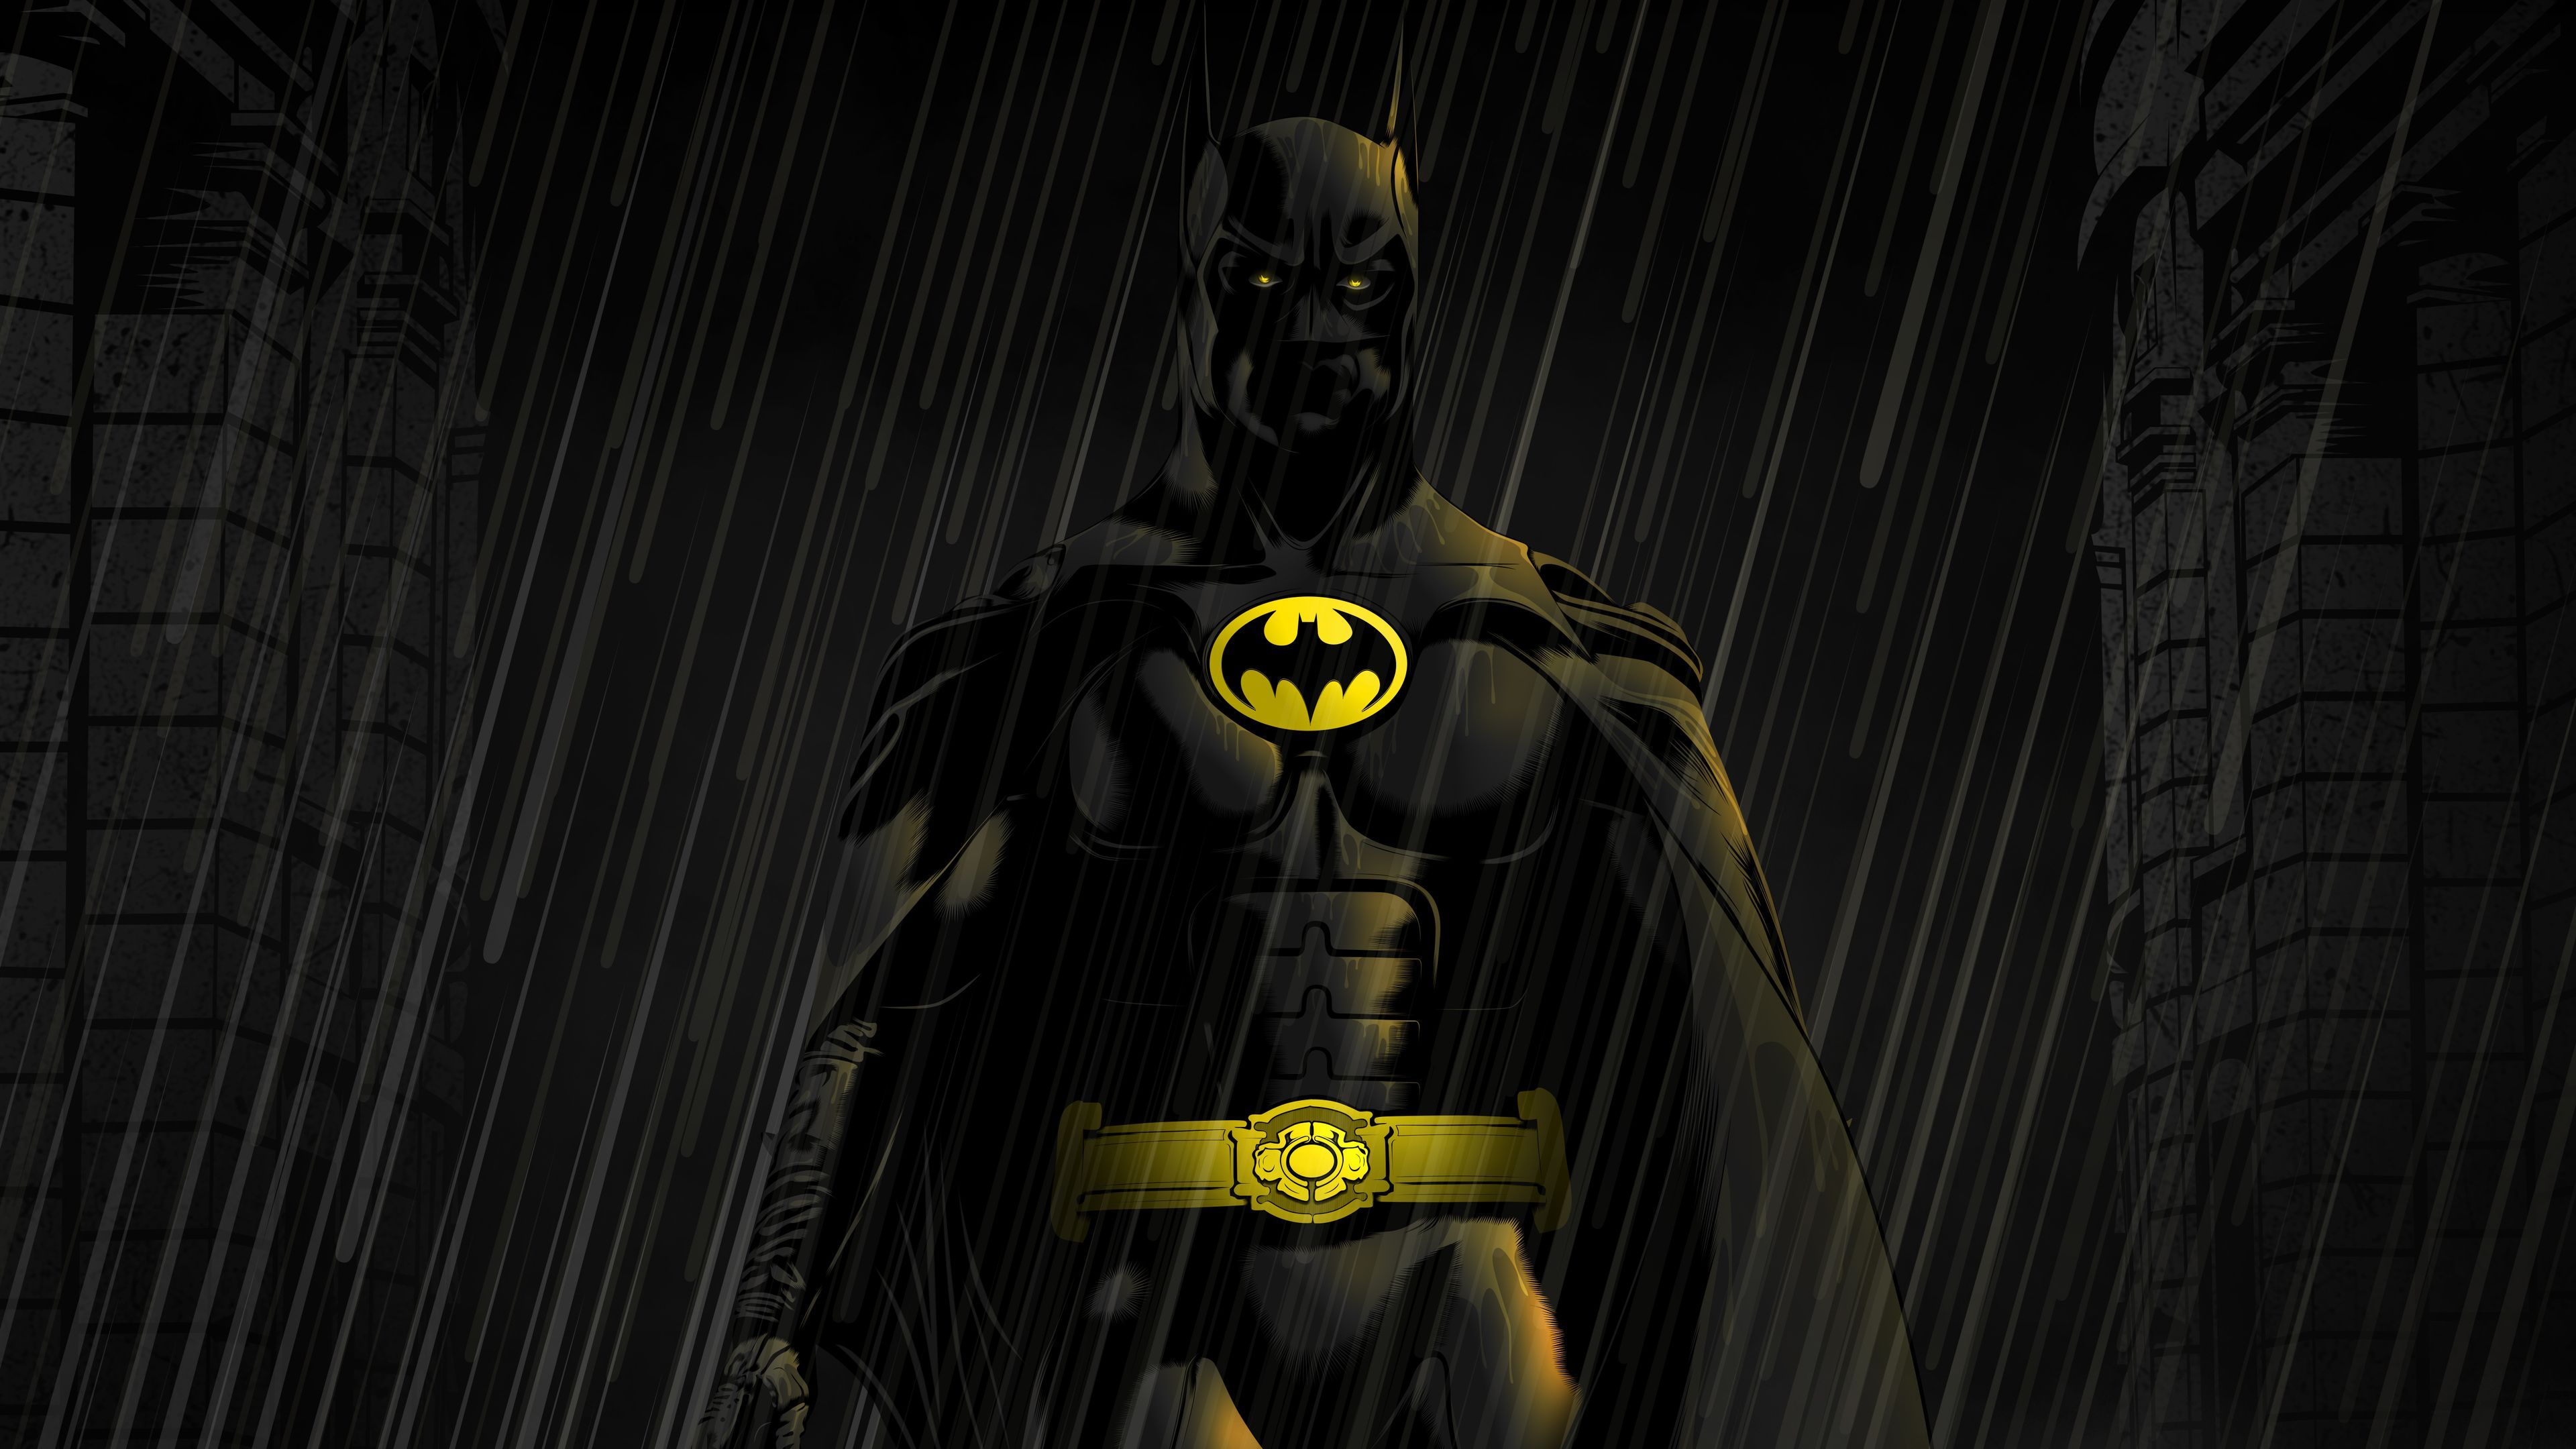 Batman Michael Keaton Superheroes Wallpaper, Hd Wallpaper, Digital Art Wallpaper, Batman Wallpaper, Artwork Wallpaper, 4. Batman Wallpaper, Batman, Superhero